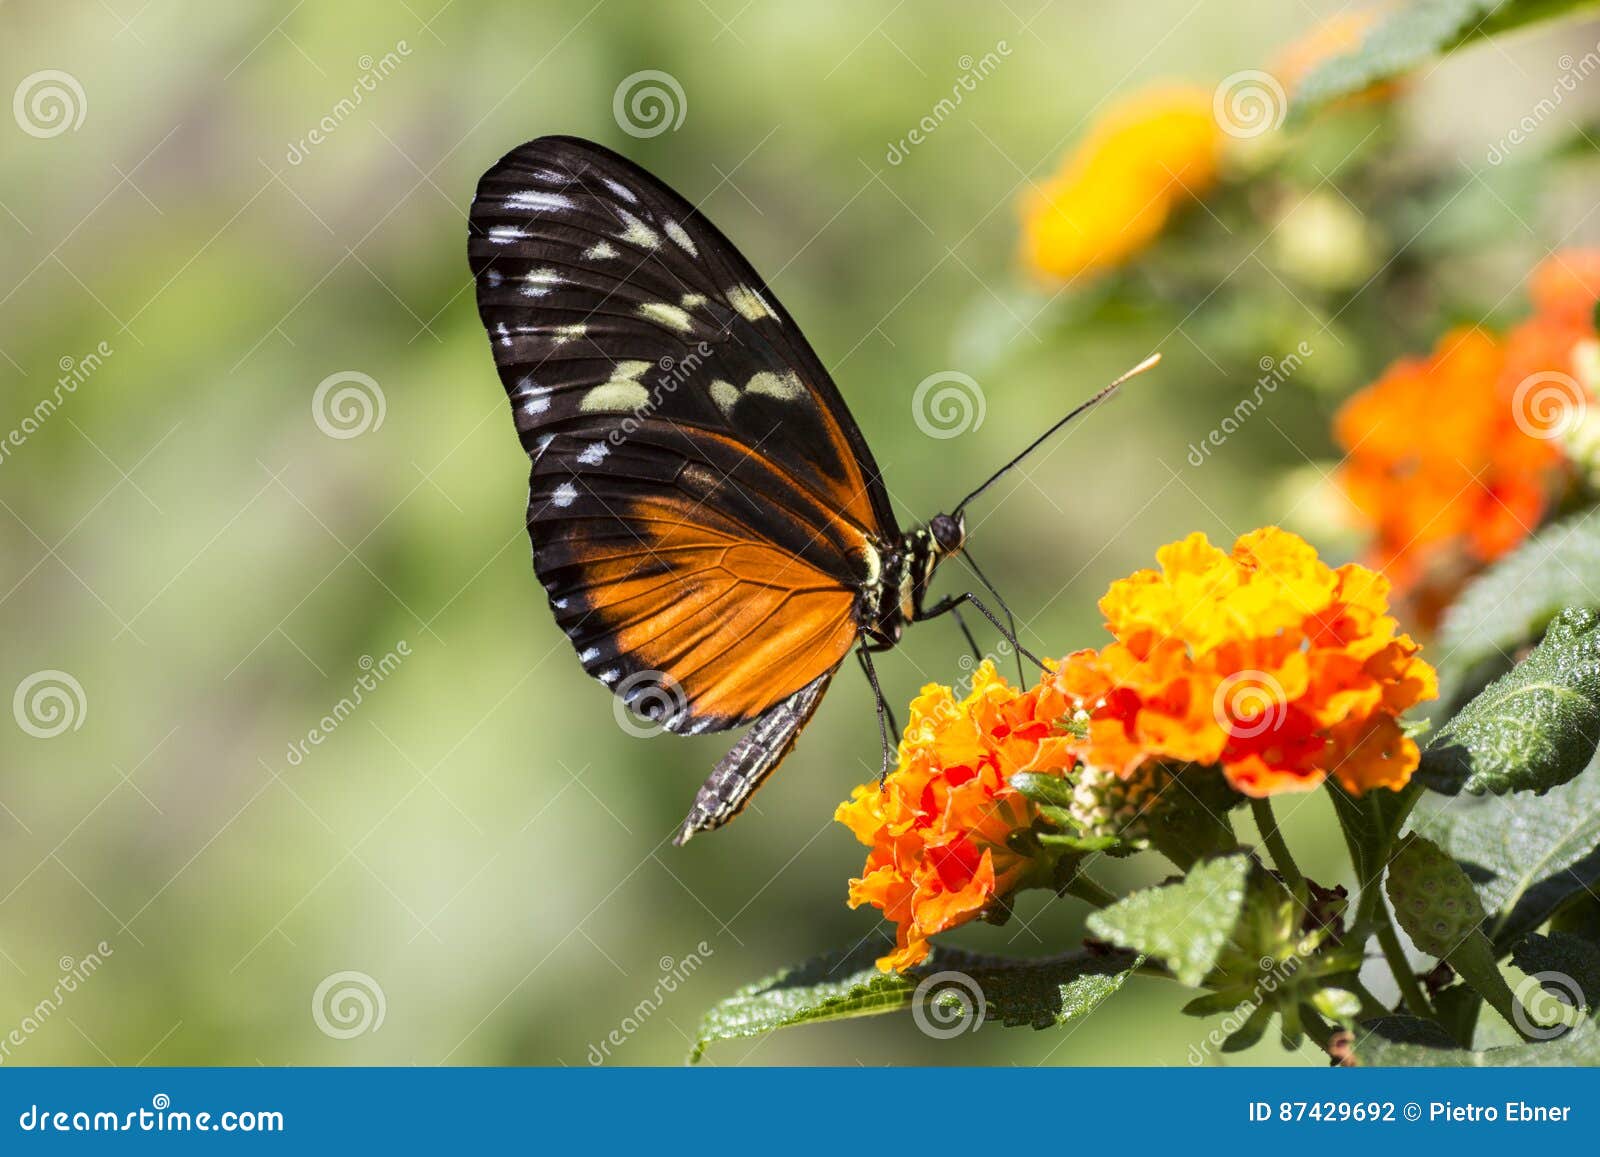 eueides isabella butterfly